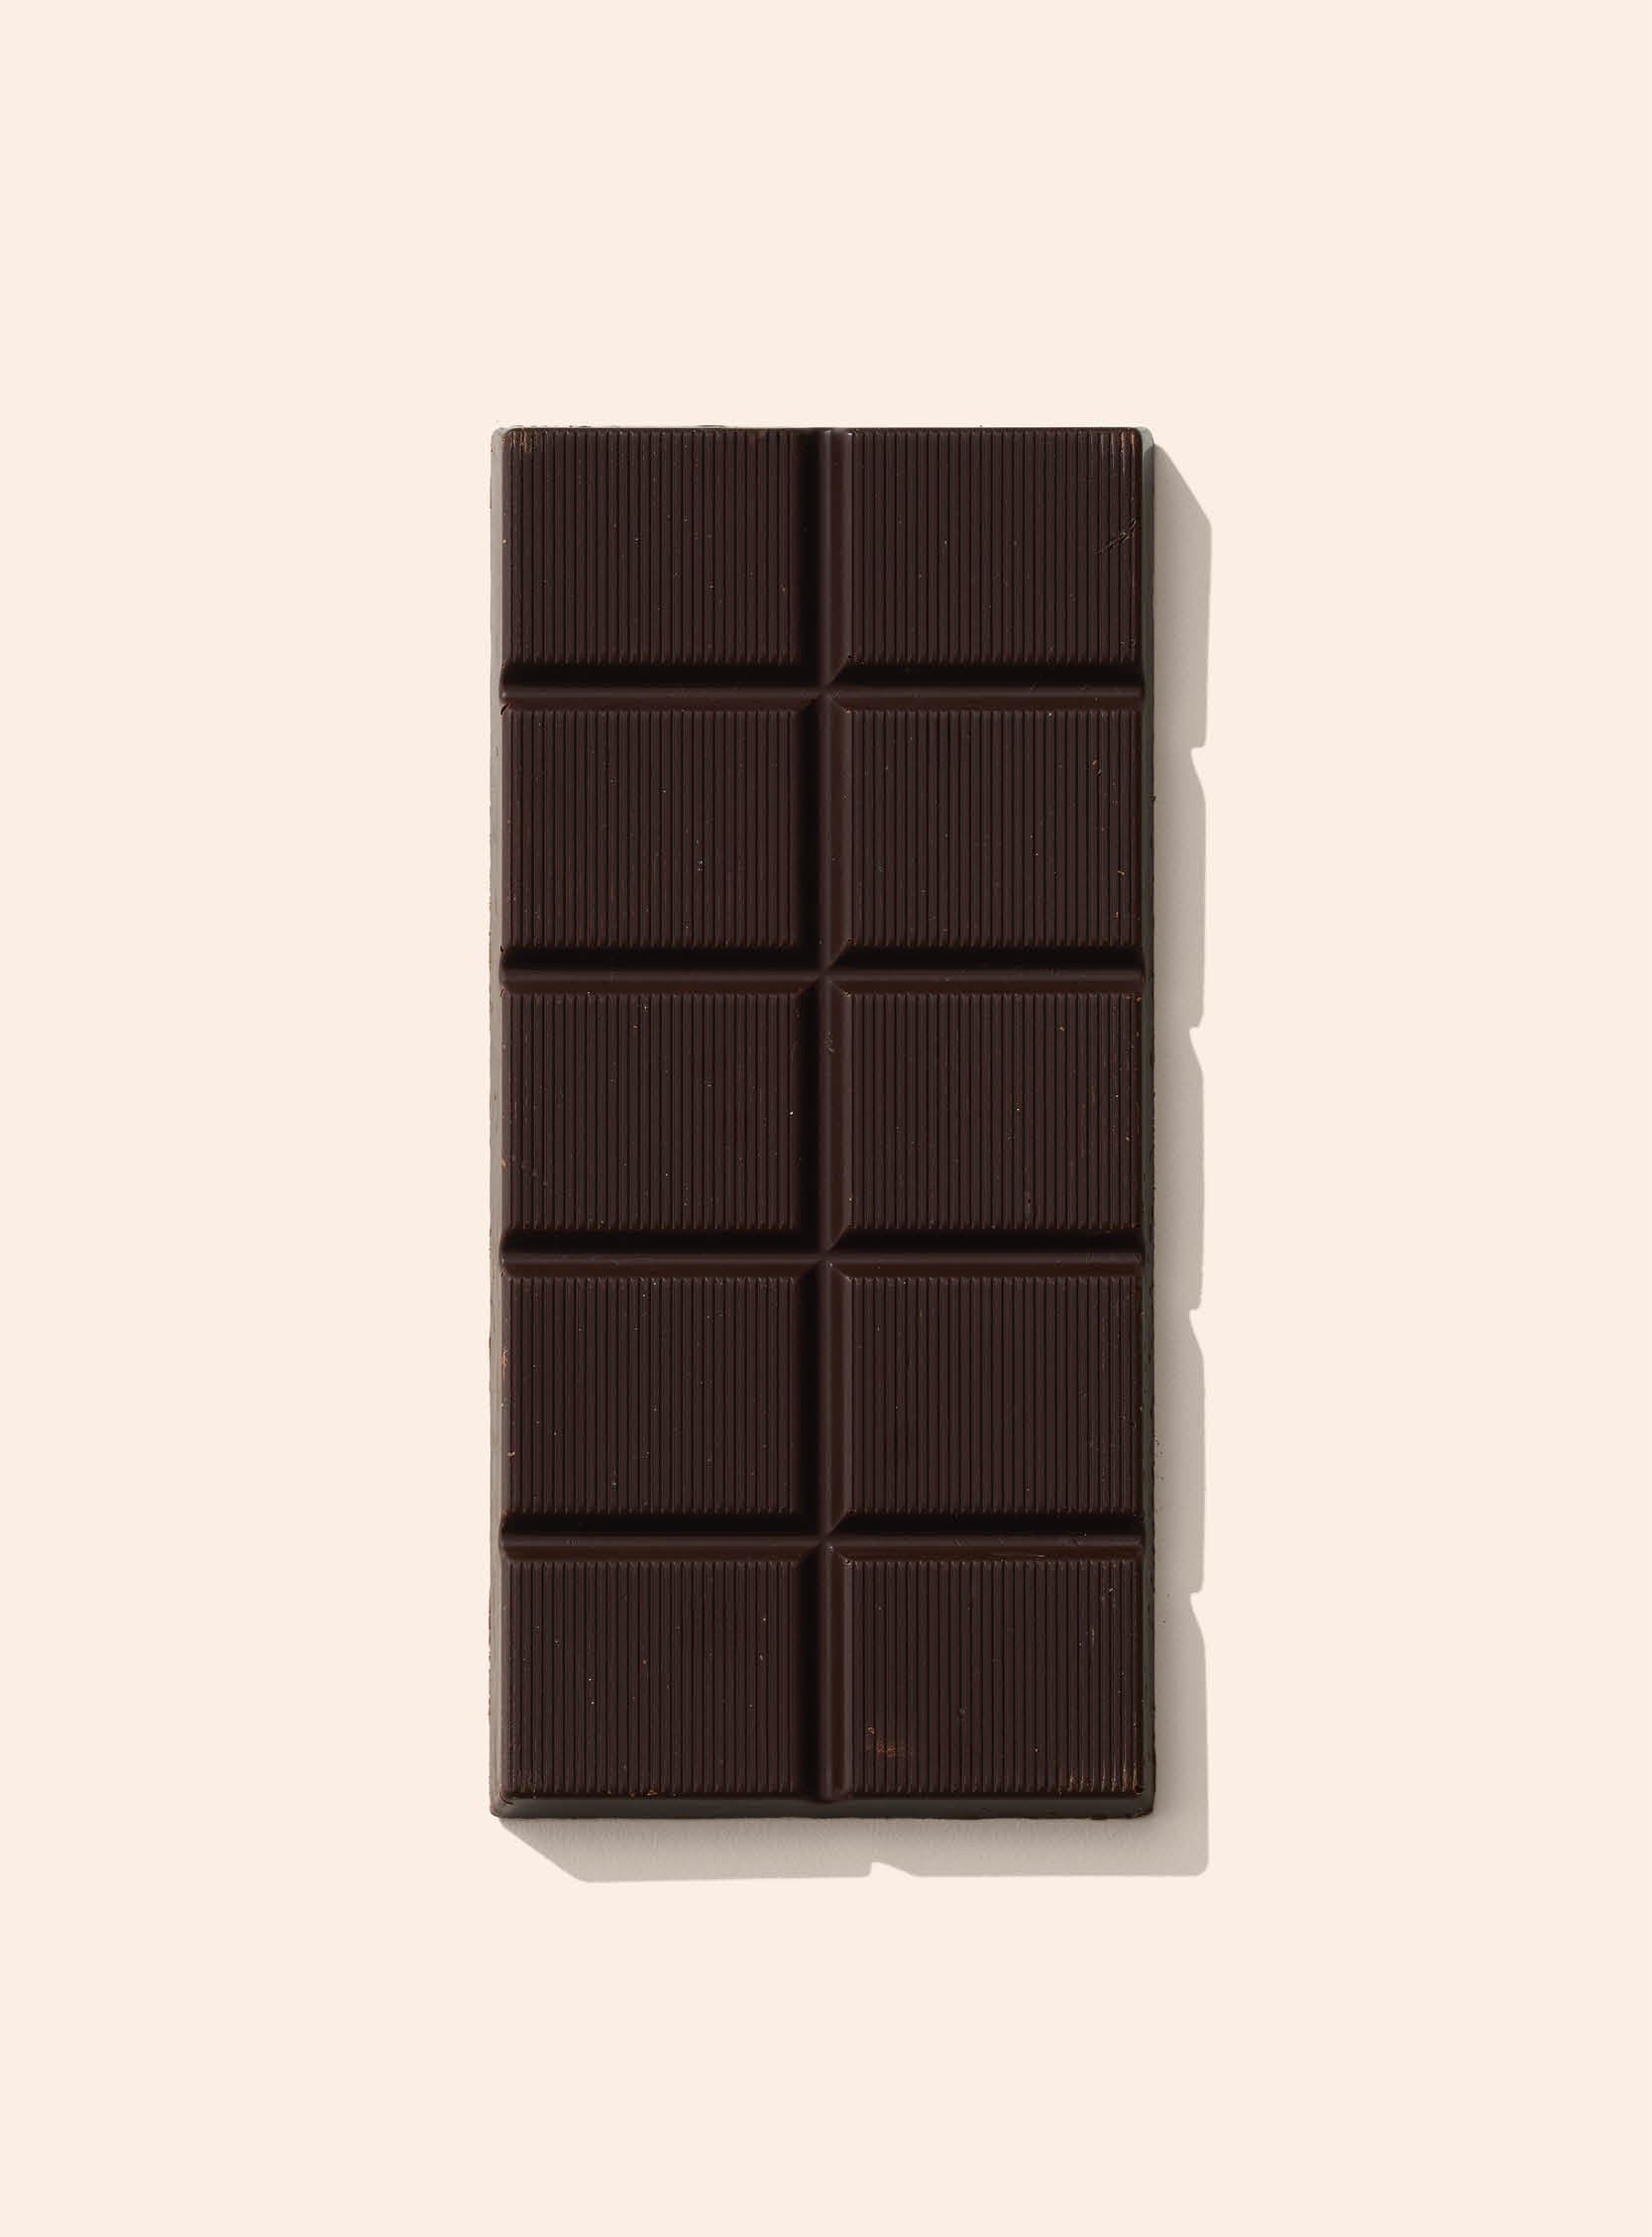 96% Dark Chocolate Bar